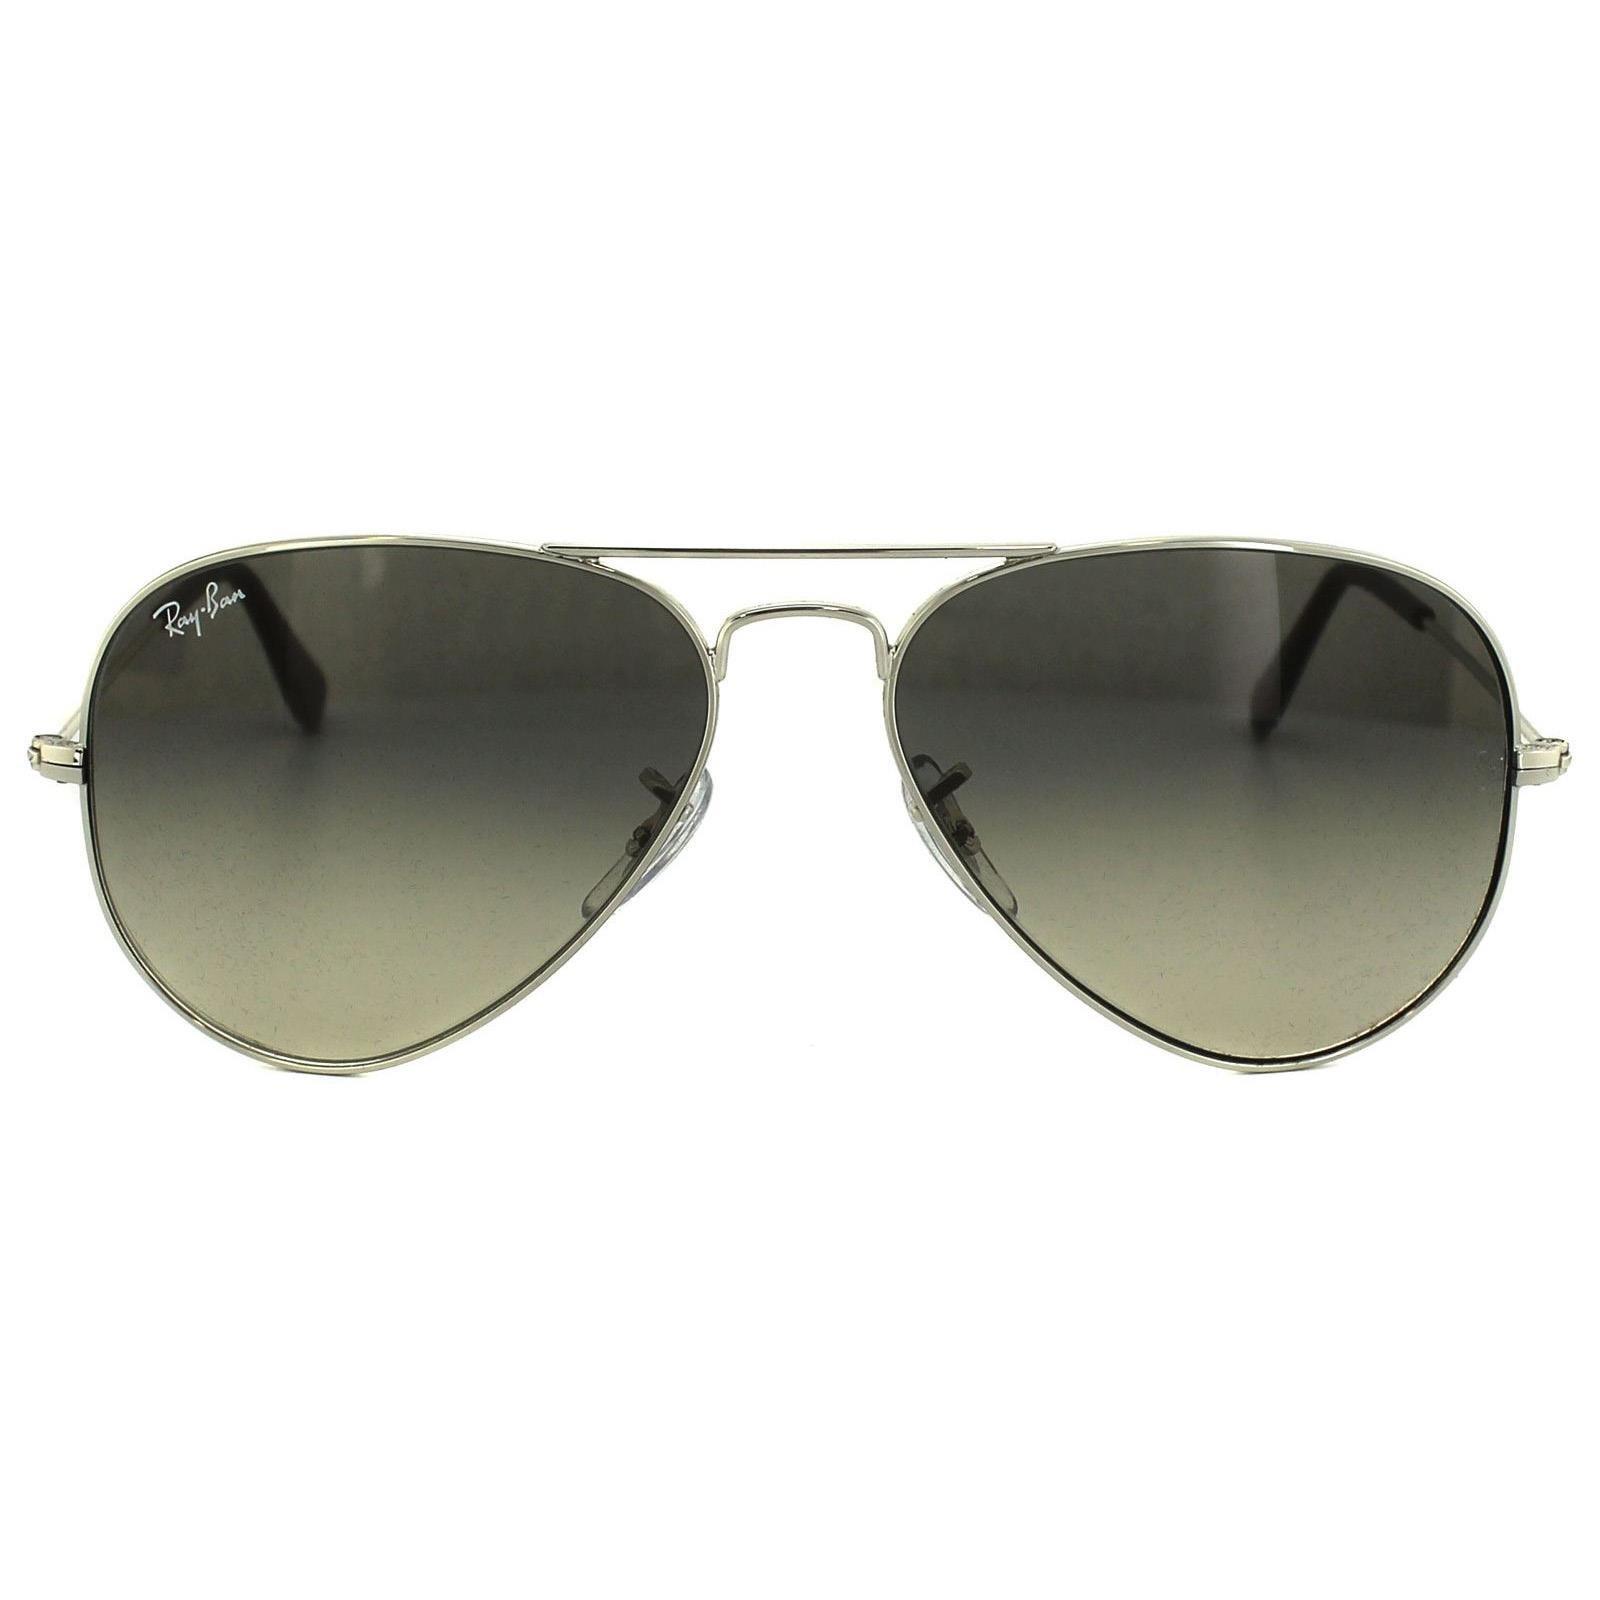 Aviator Silver Grey Gradient Sunglasses